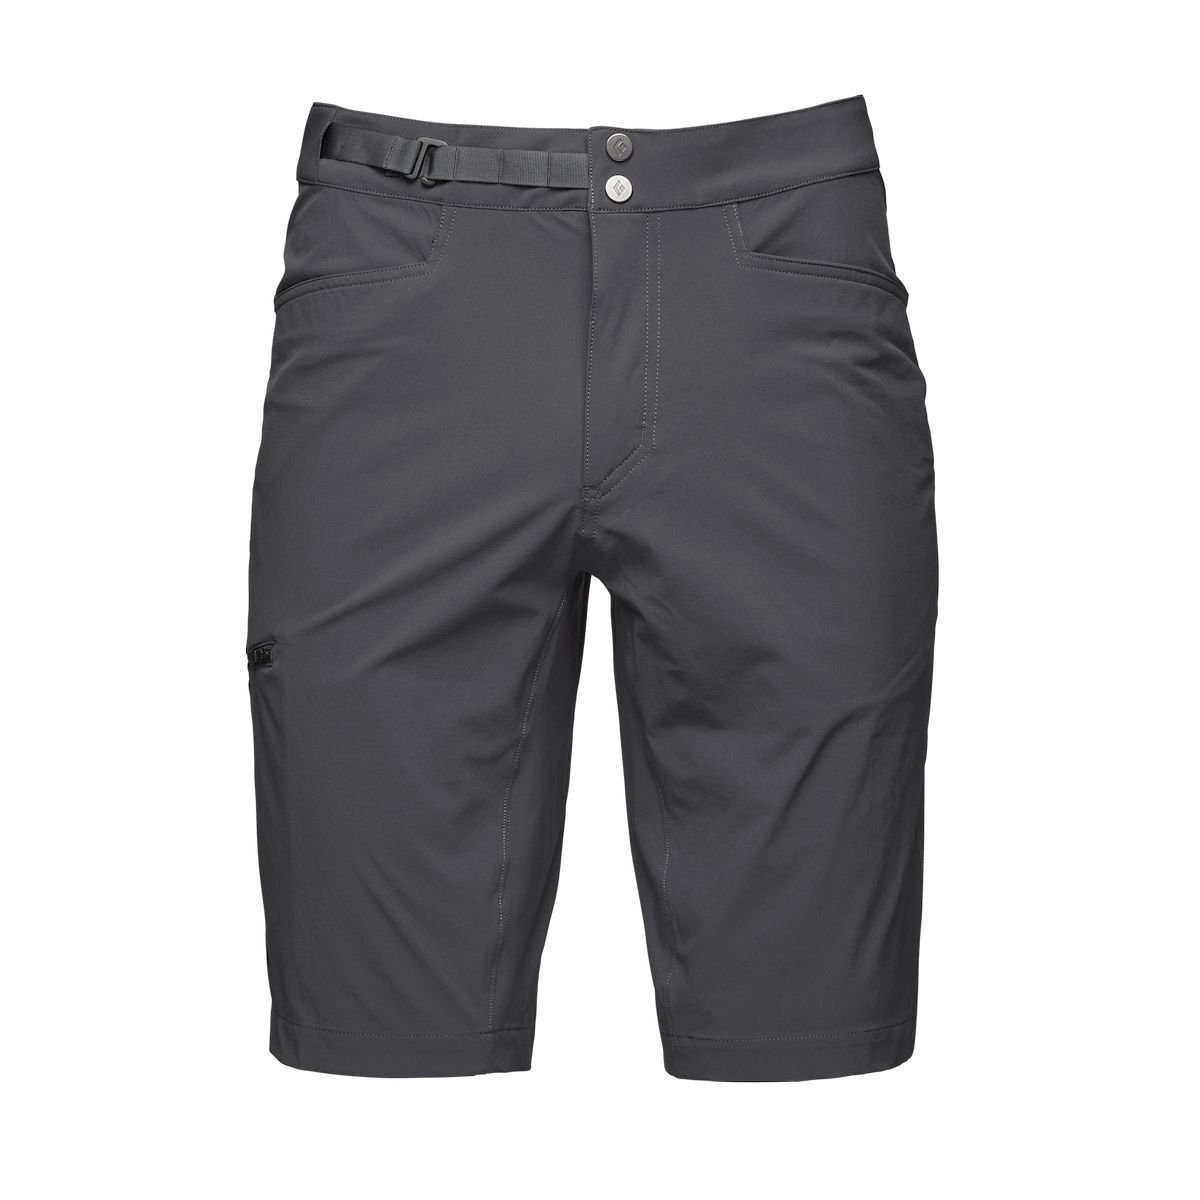 Black Diamond Valley Shorts - Climbing shorts